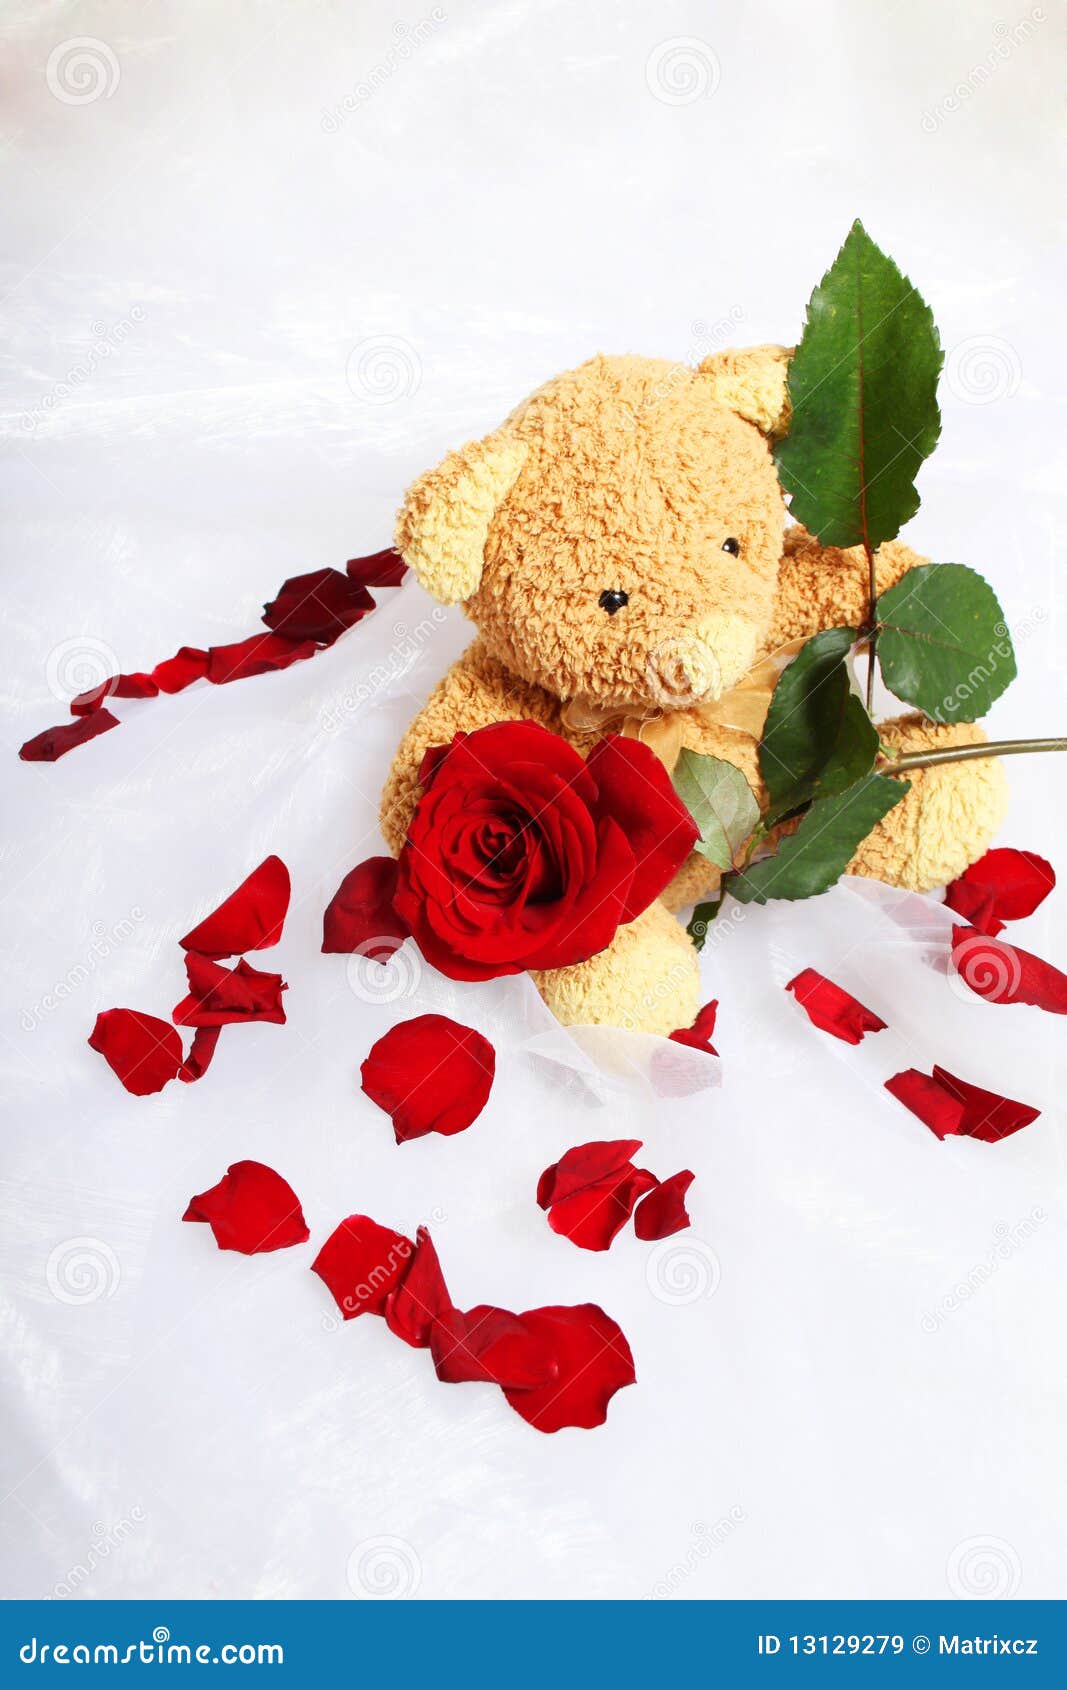 Teddy bear stock image. Image of valentine, petals, relationship - 13129279